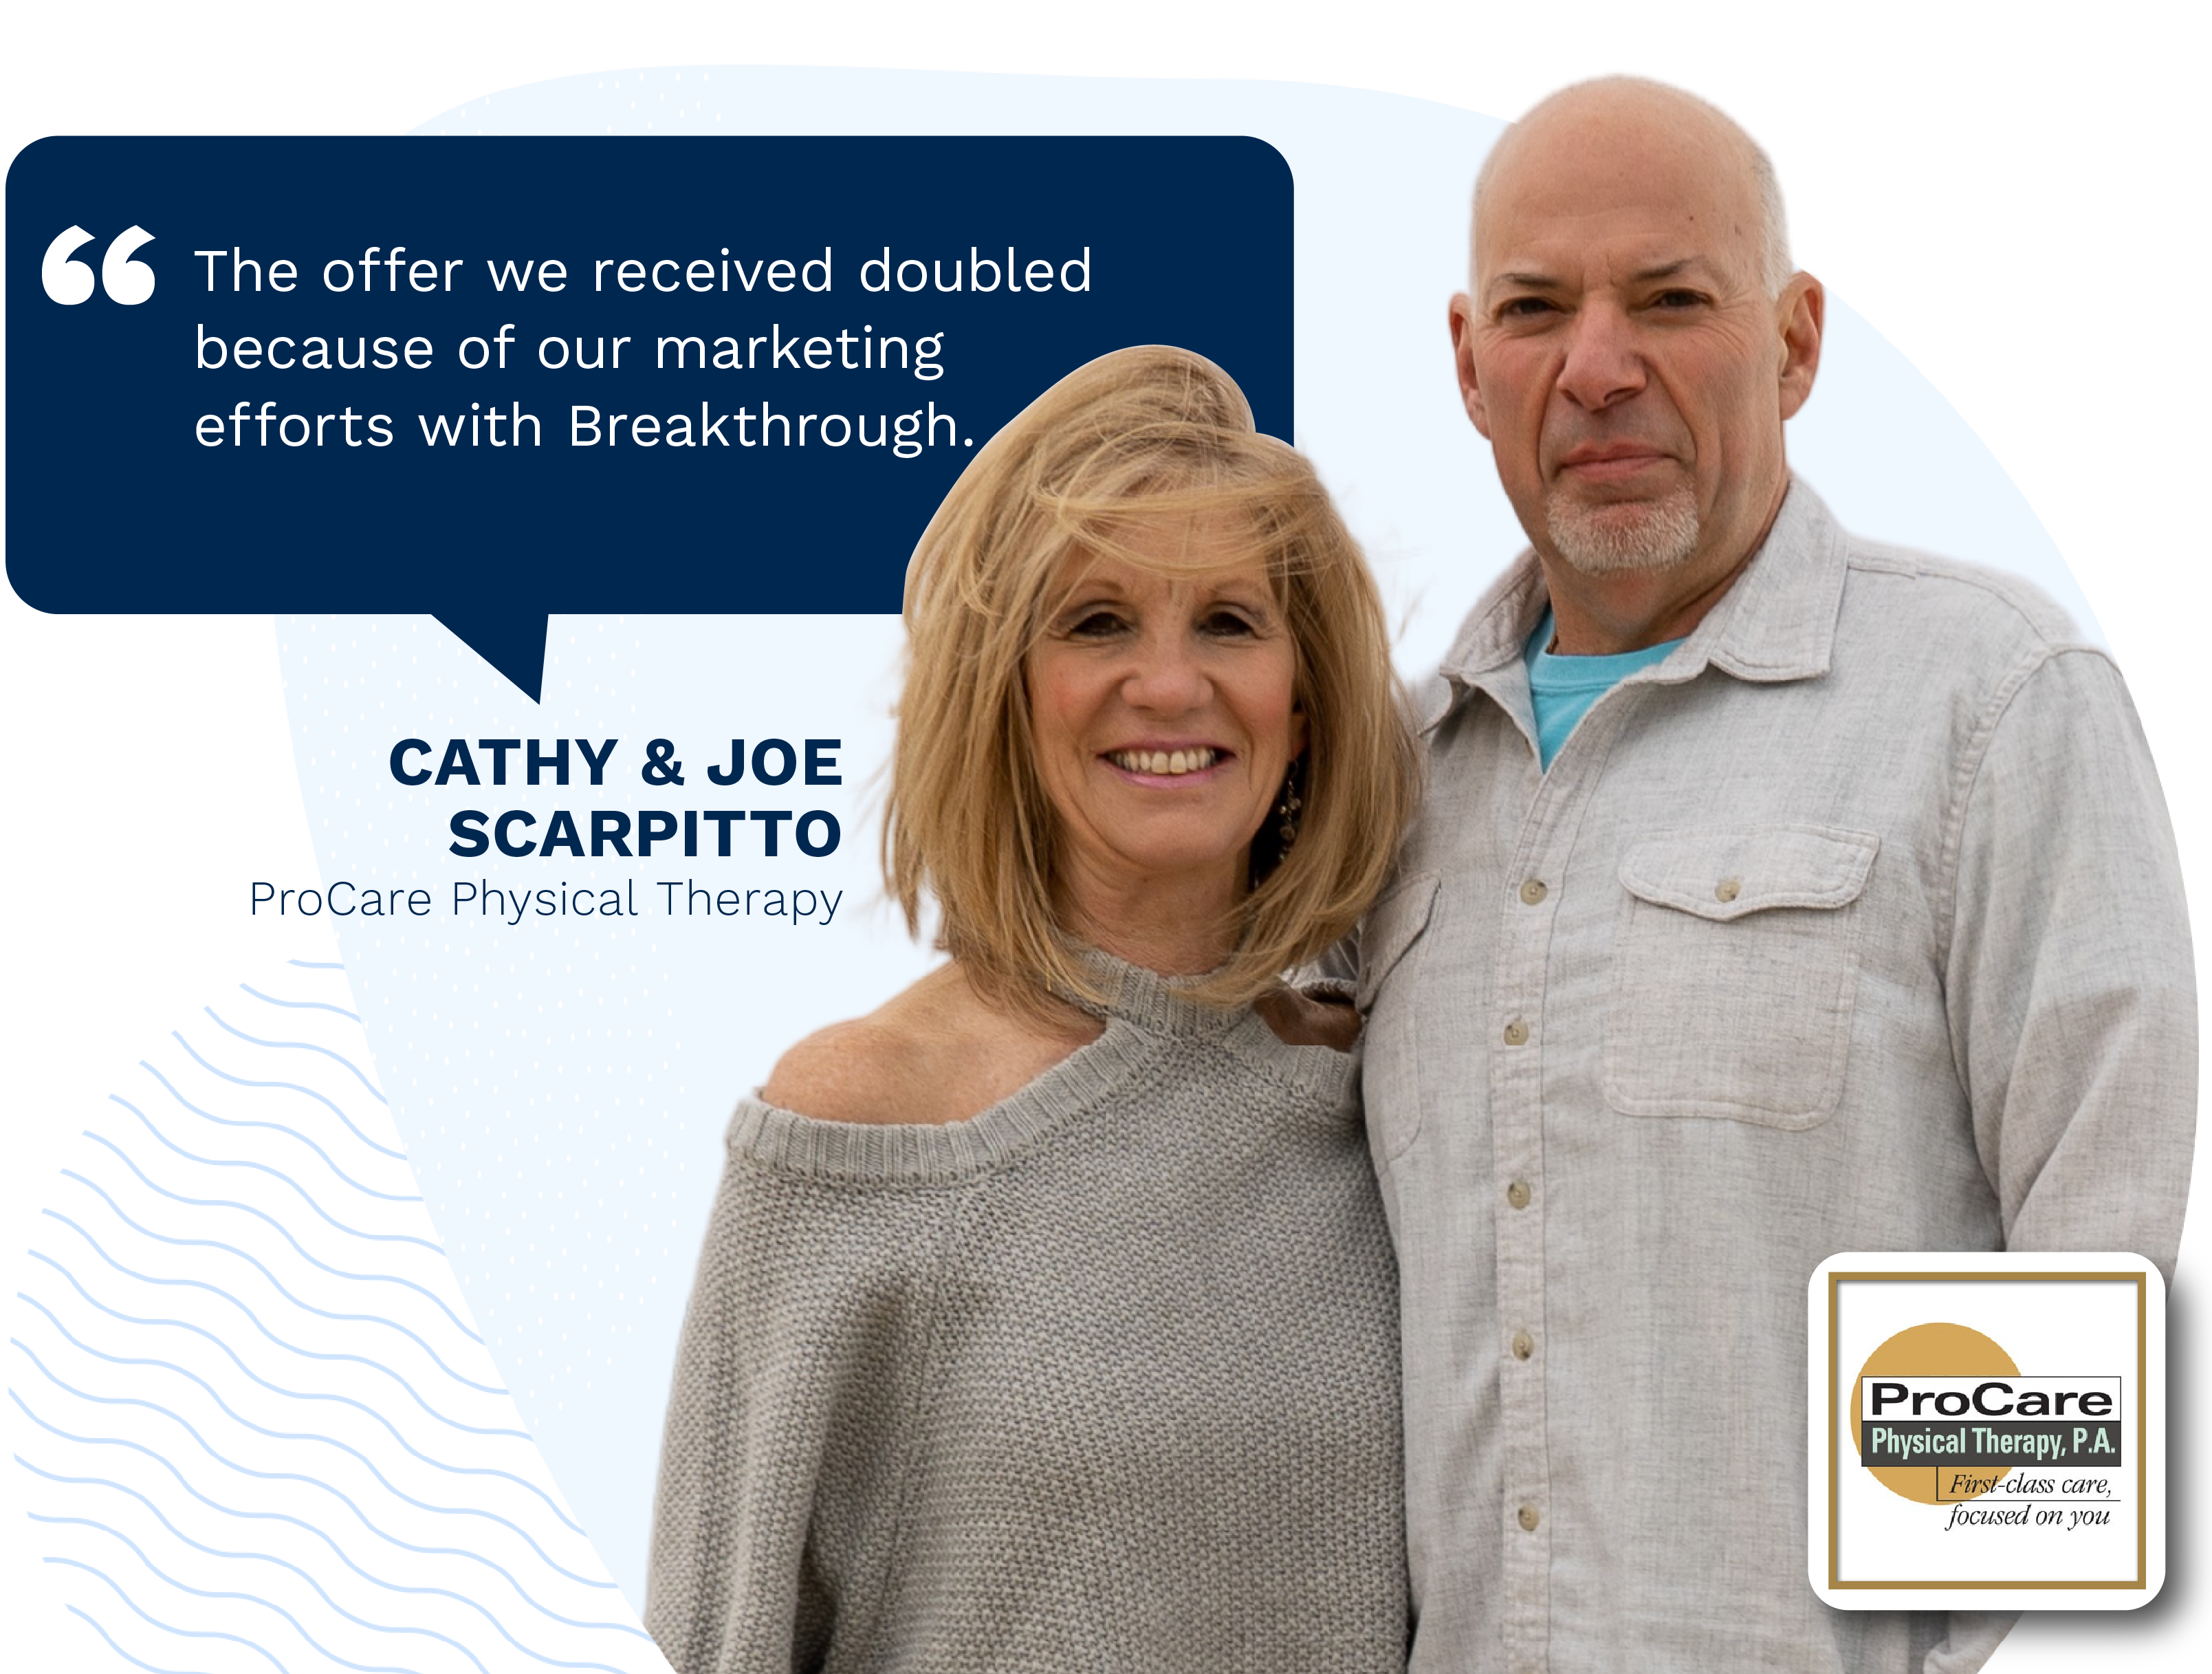 Cathy & Joe Scarpitto Double Their Valuation